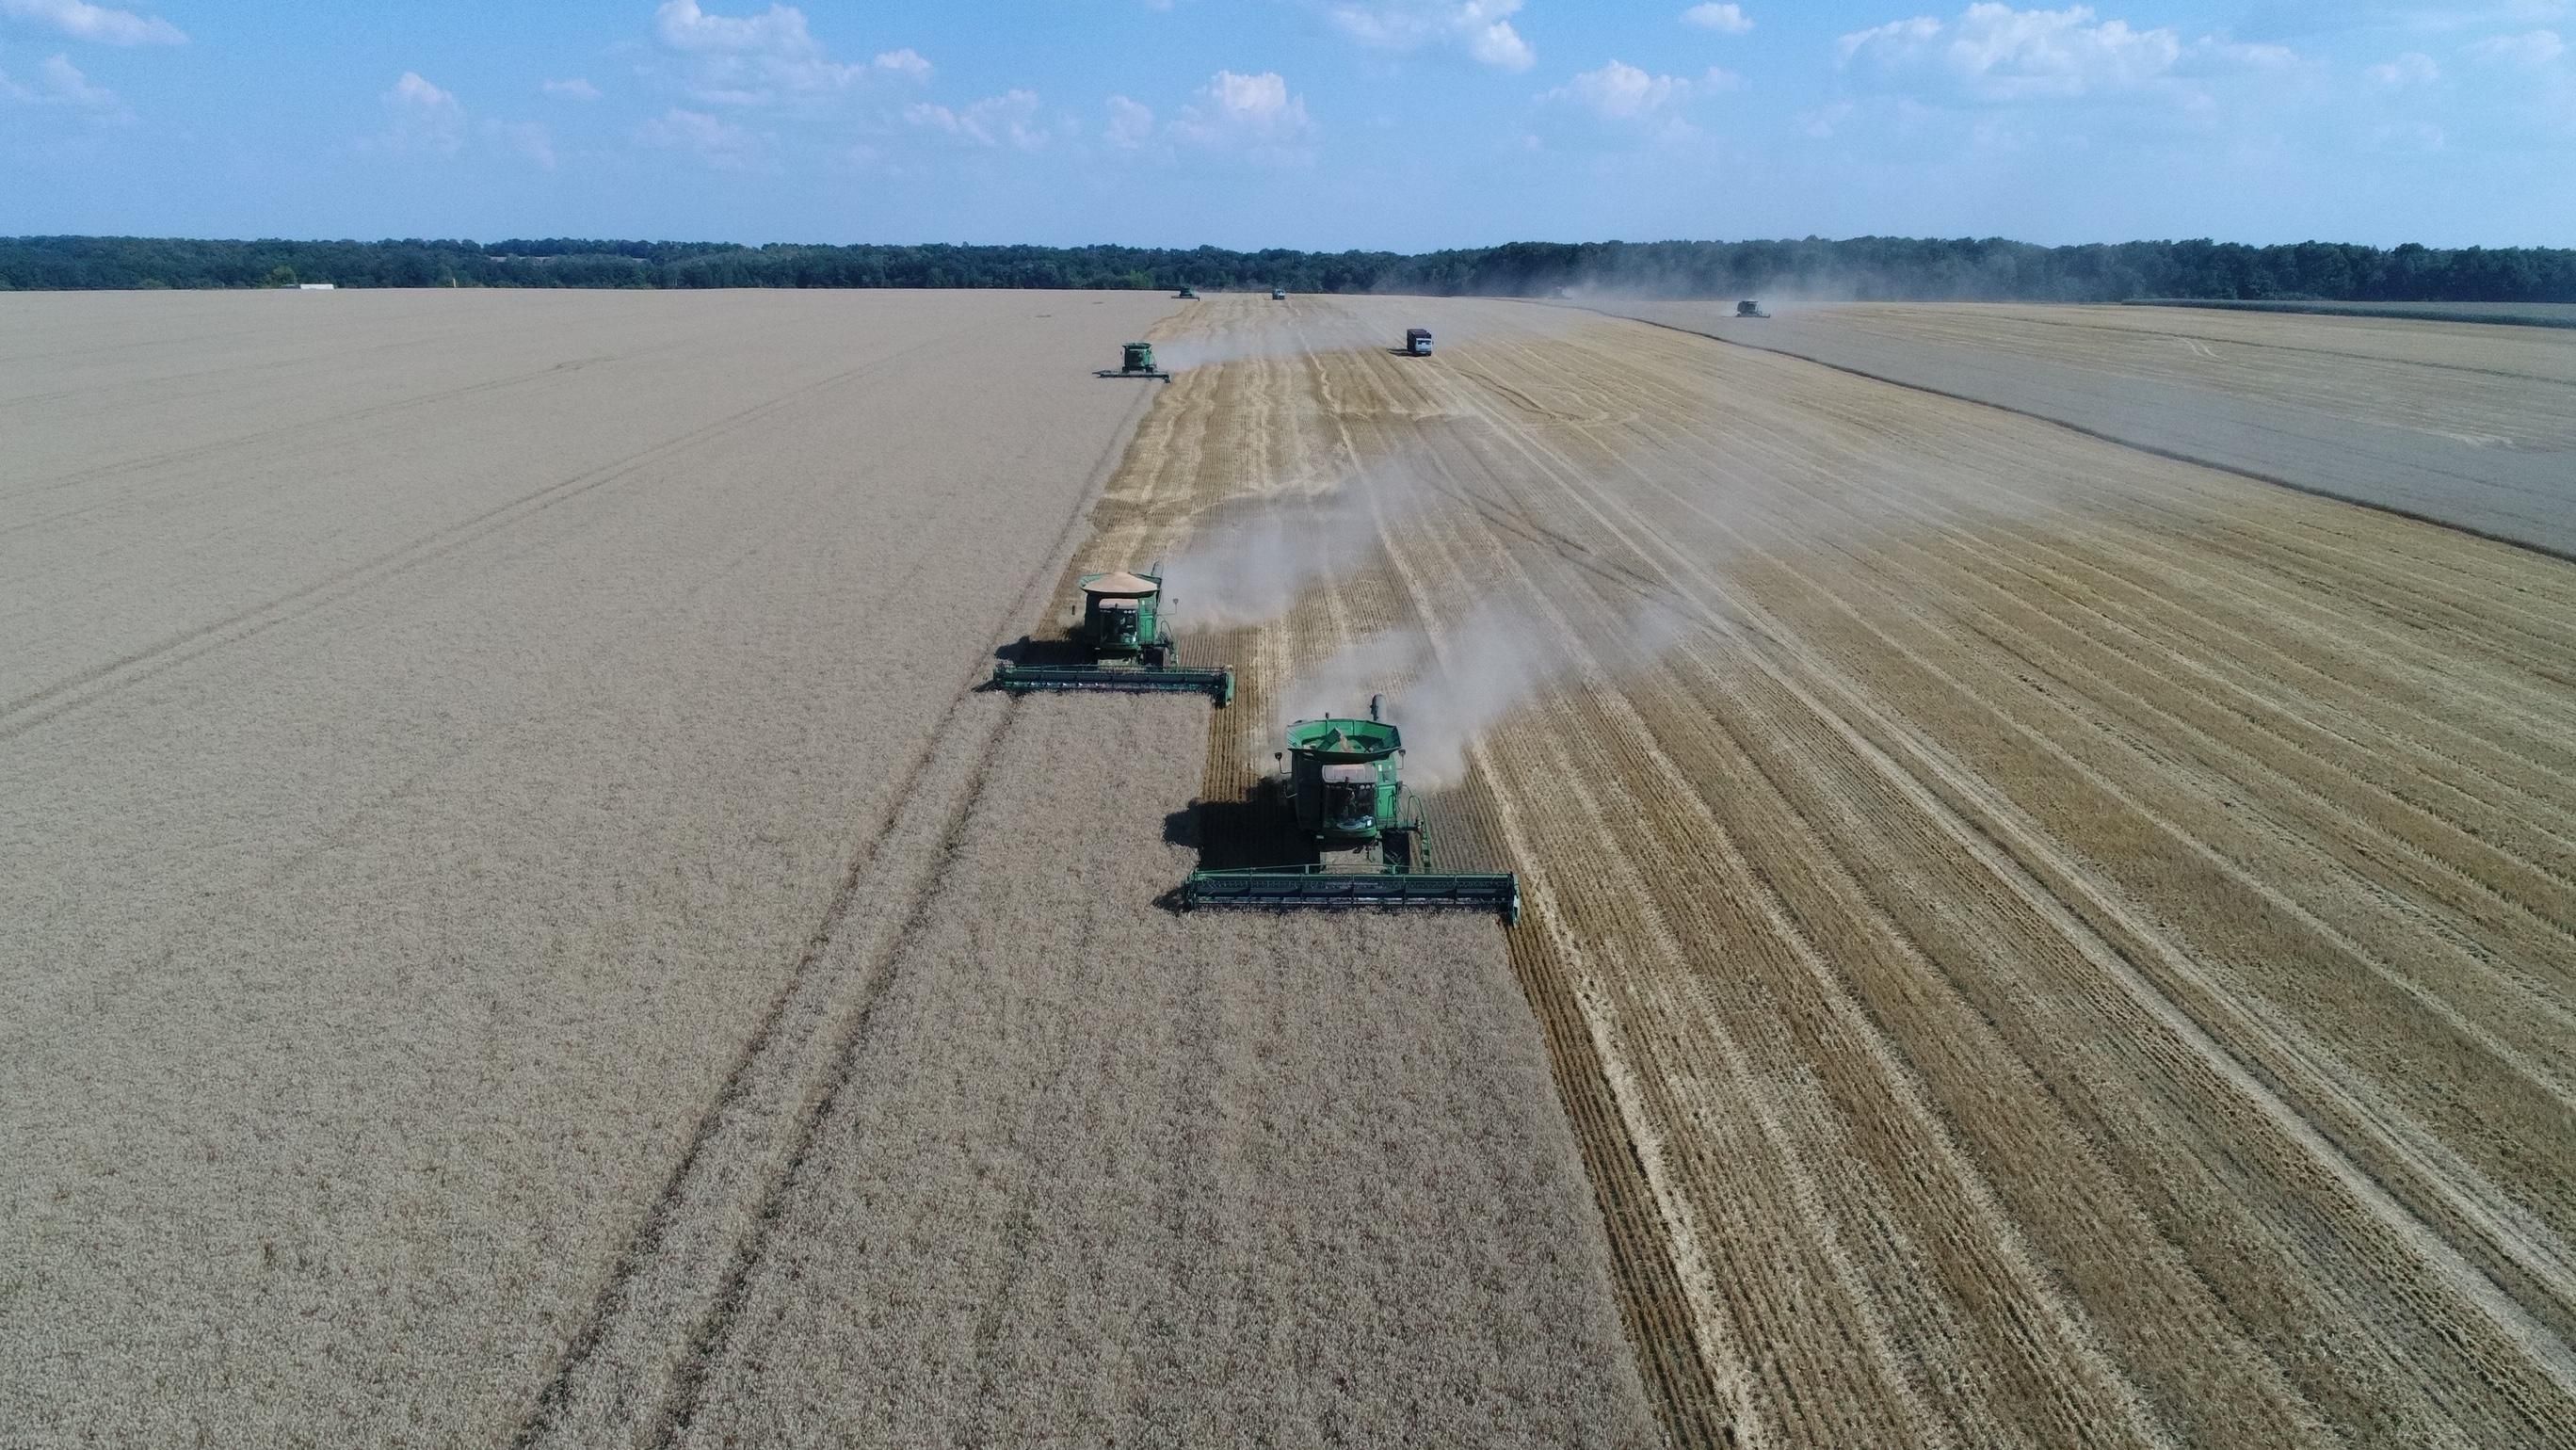 В "Укрлендфармінгу" Бахматюка прогнозують високий урожай озимих зернових